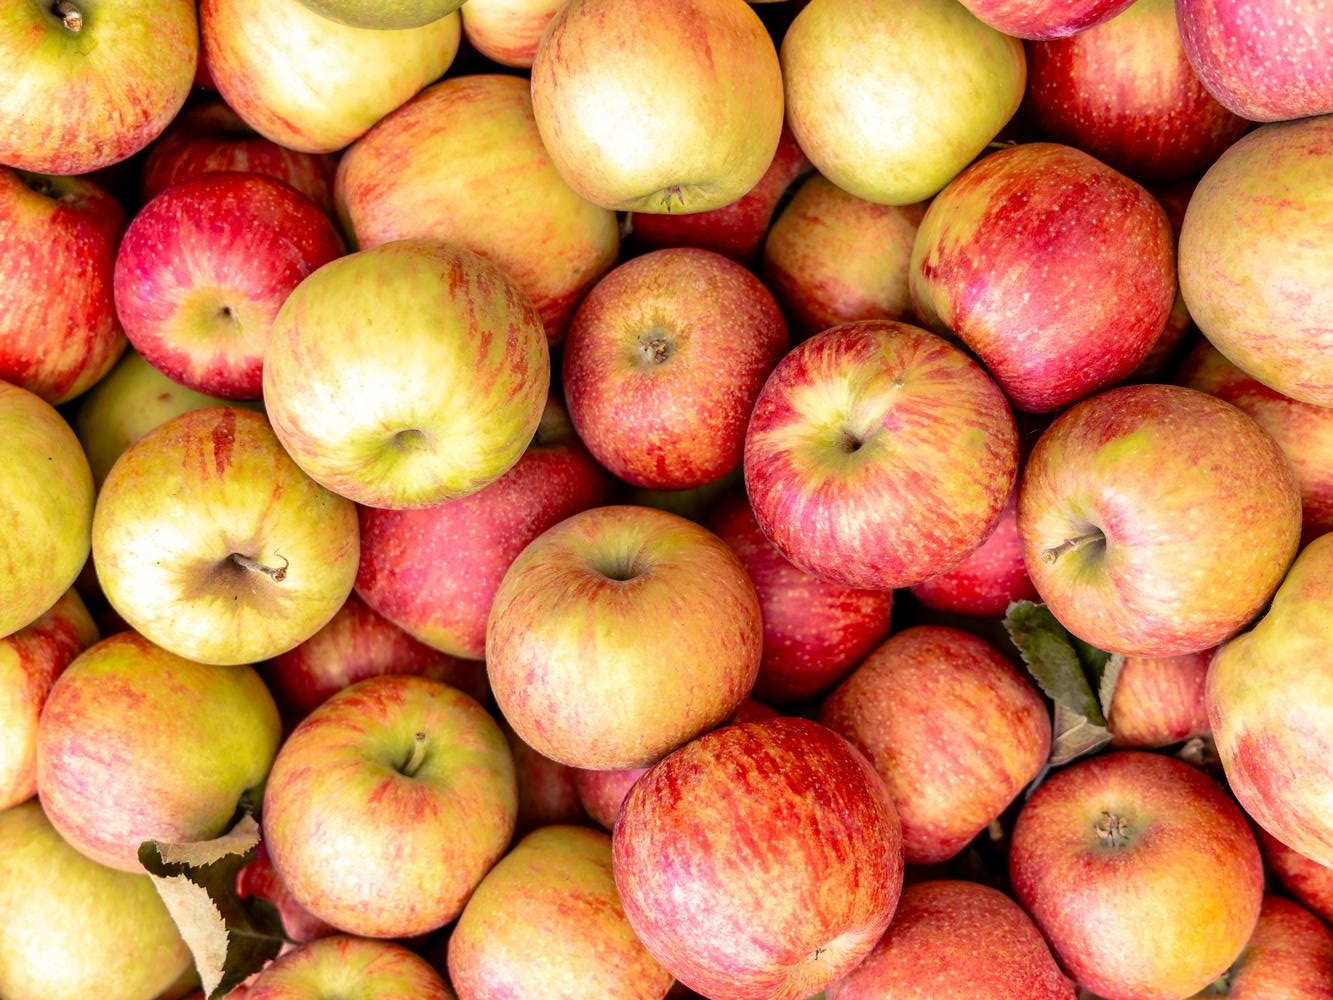 Red Delicious Apples Washington State Fresh Produce Fruit per Pound